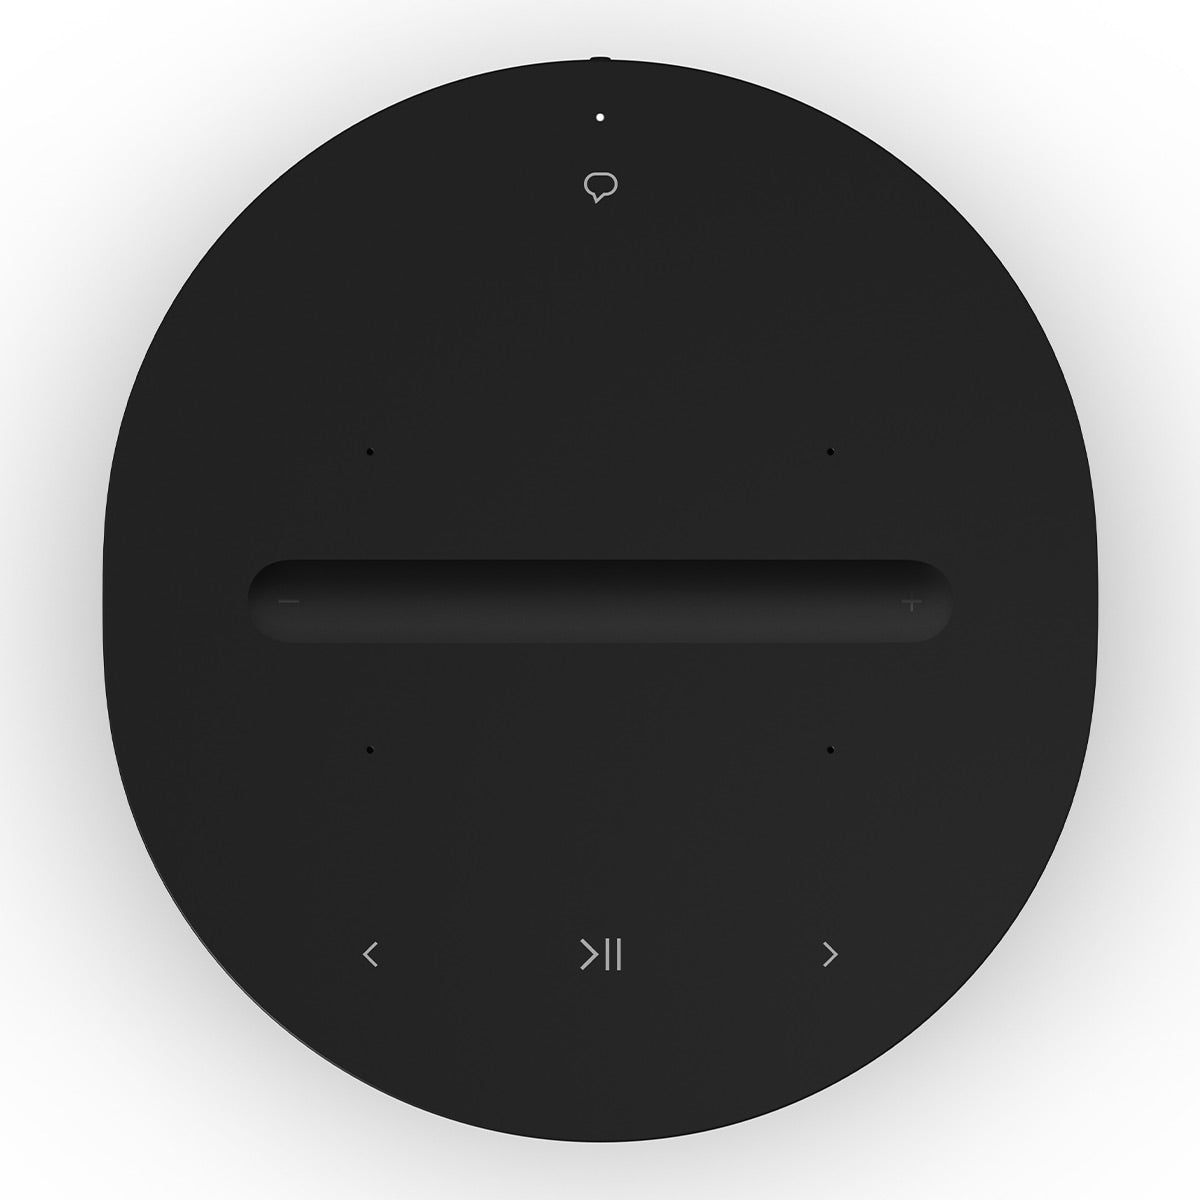 Sonos Surround Set with Beam (Gen 2) Soundbar and Pair of Era 100 Wireless Smart Speakers (Black)